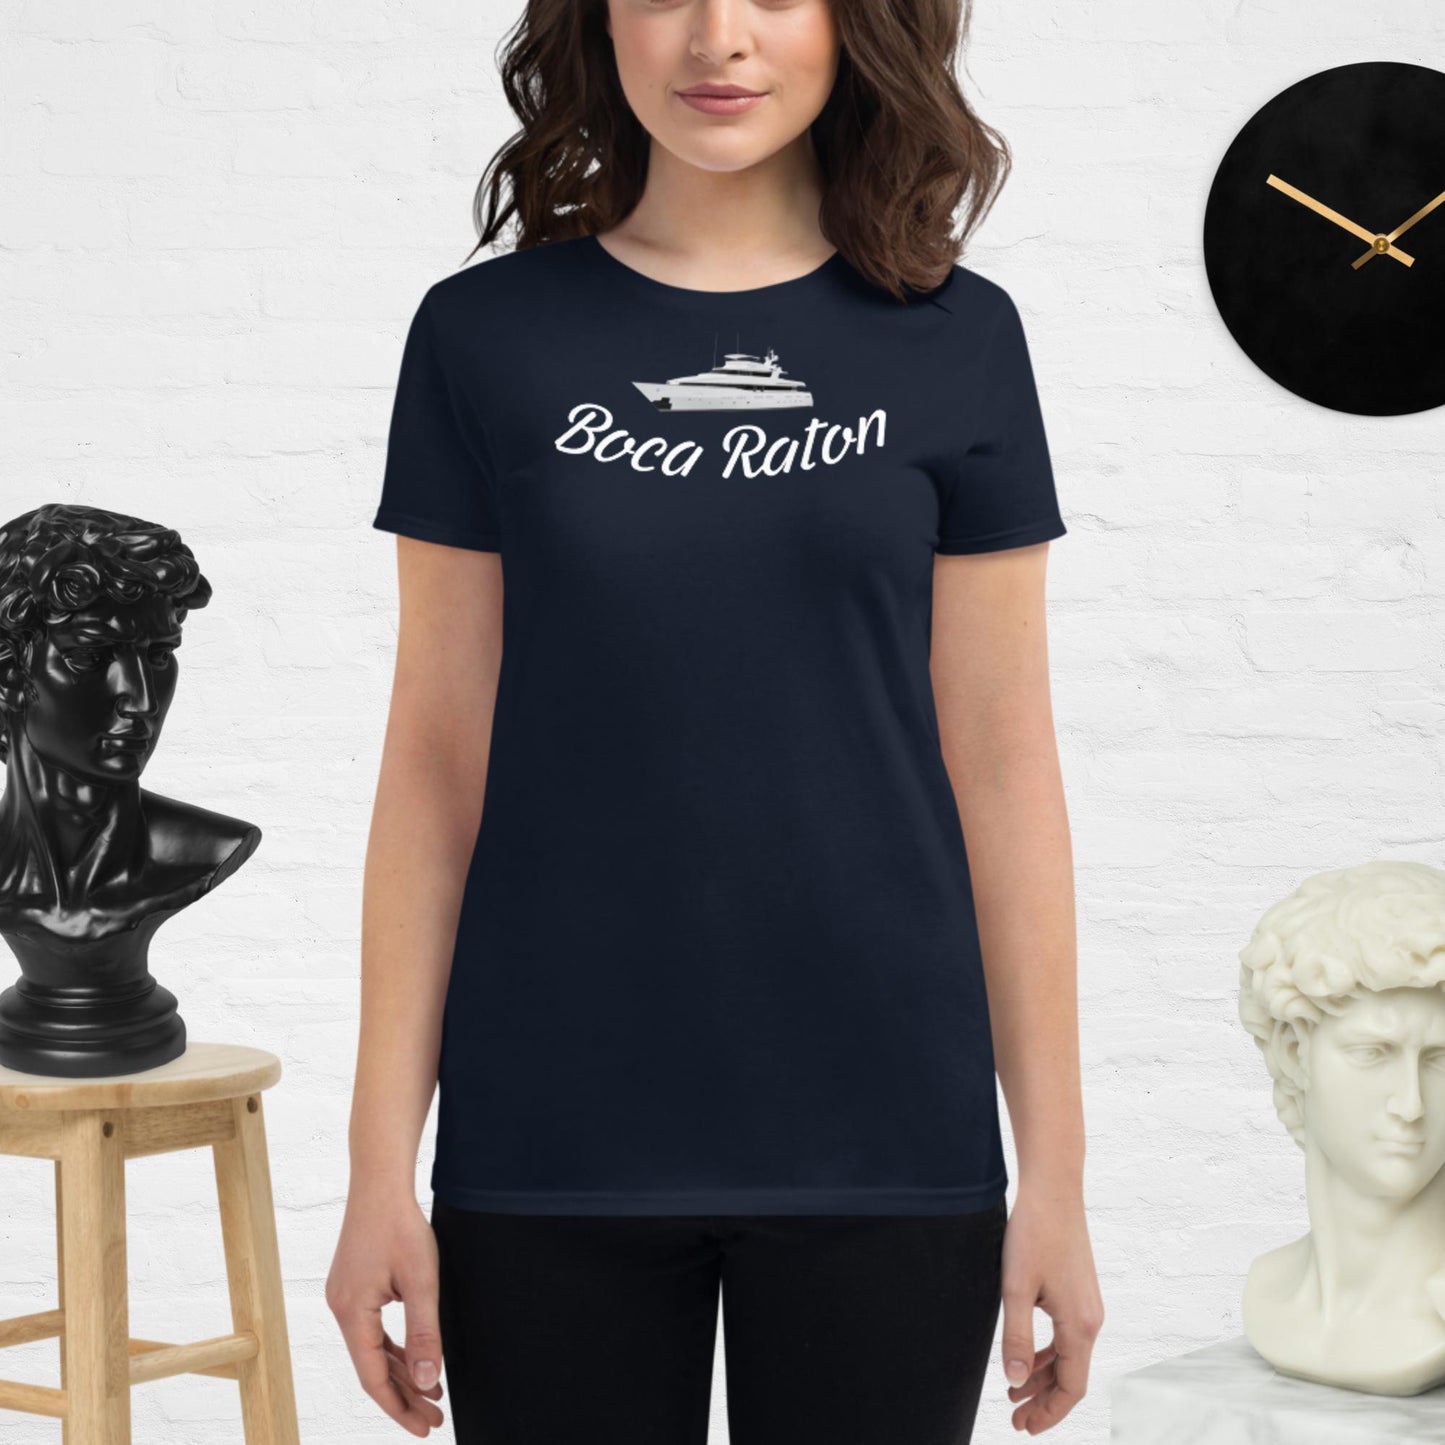 Boca Raton Yacht 954 Collection Women's short sleeve t-shirt